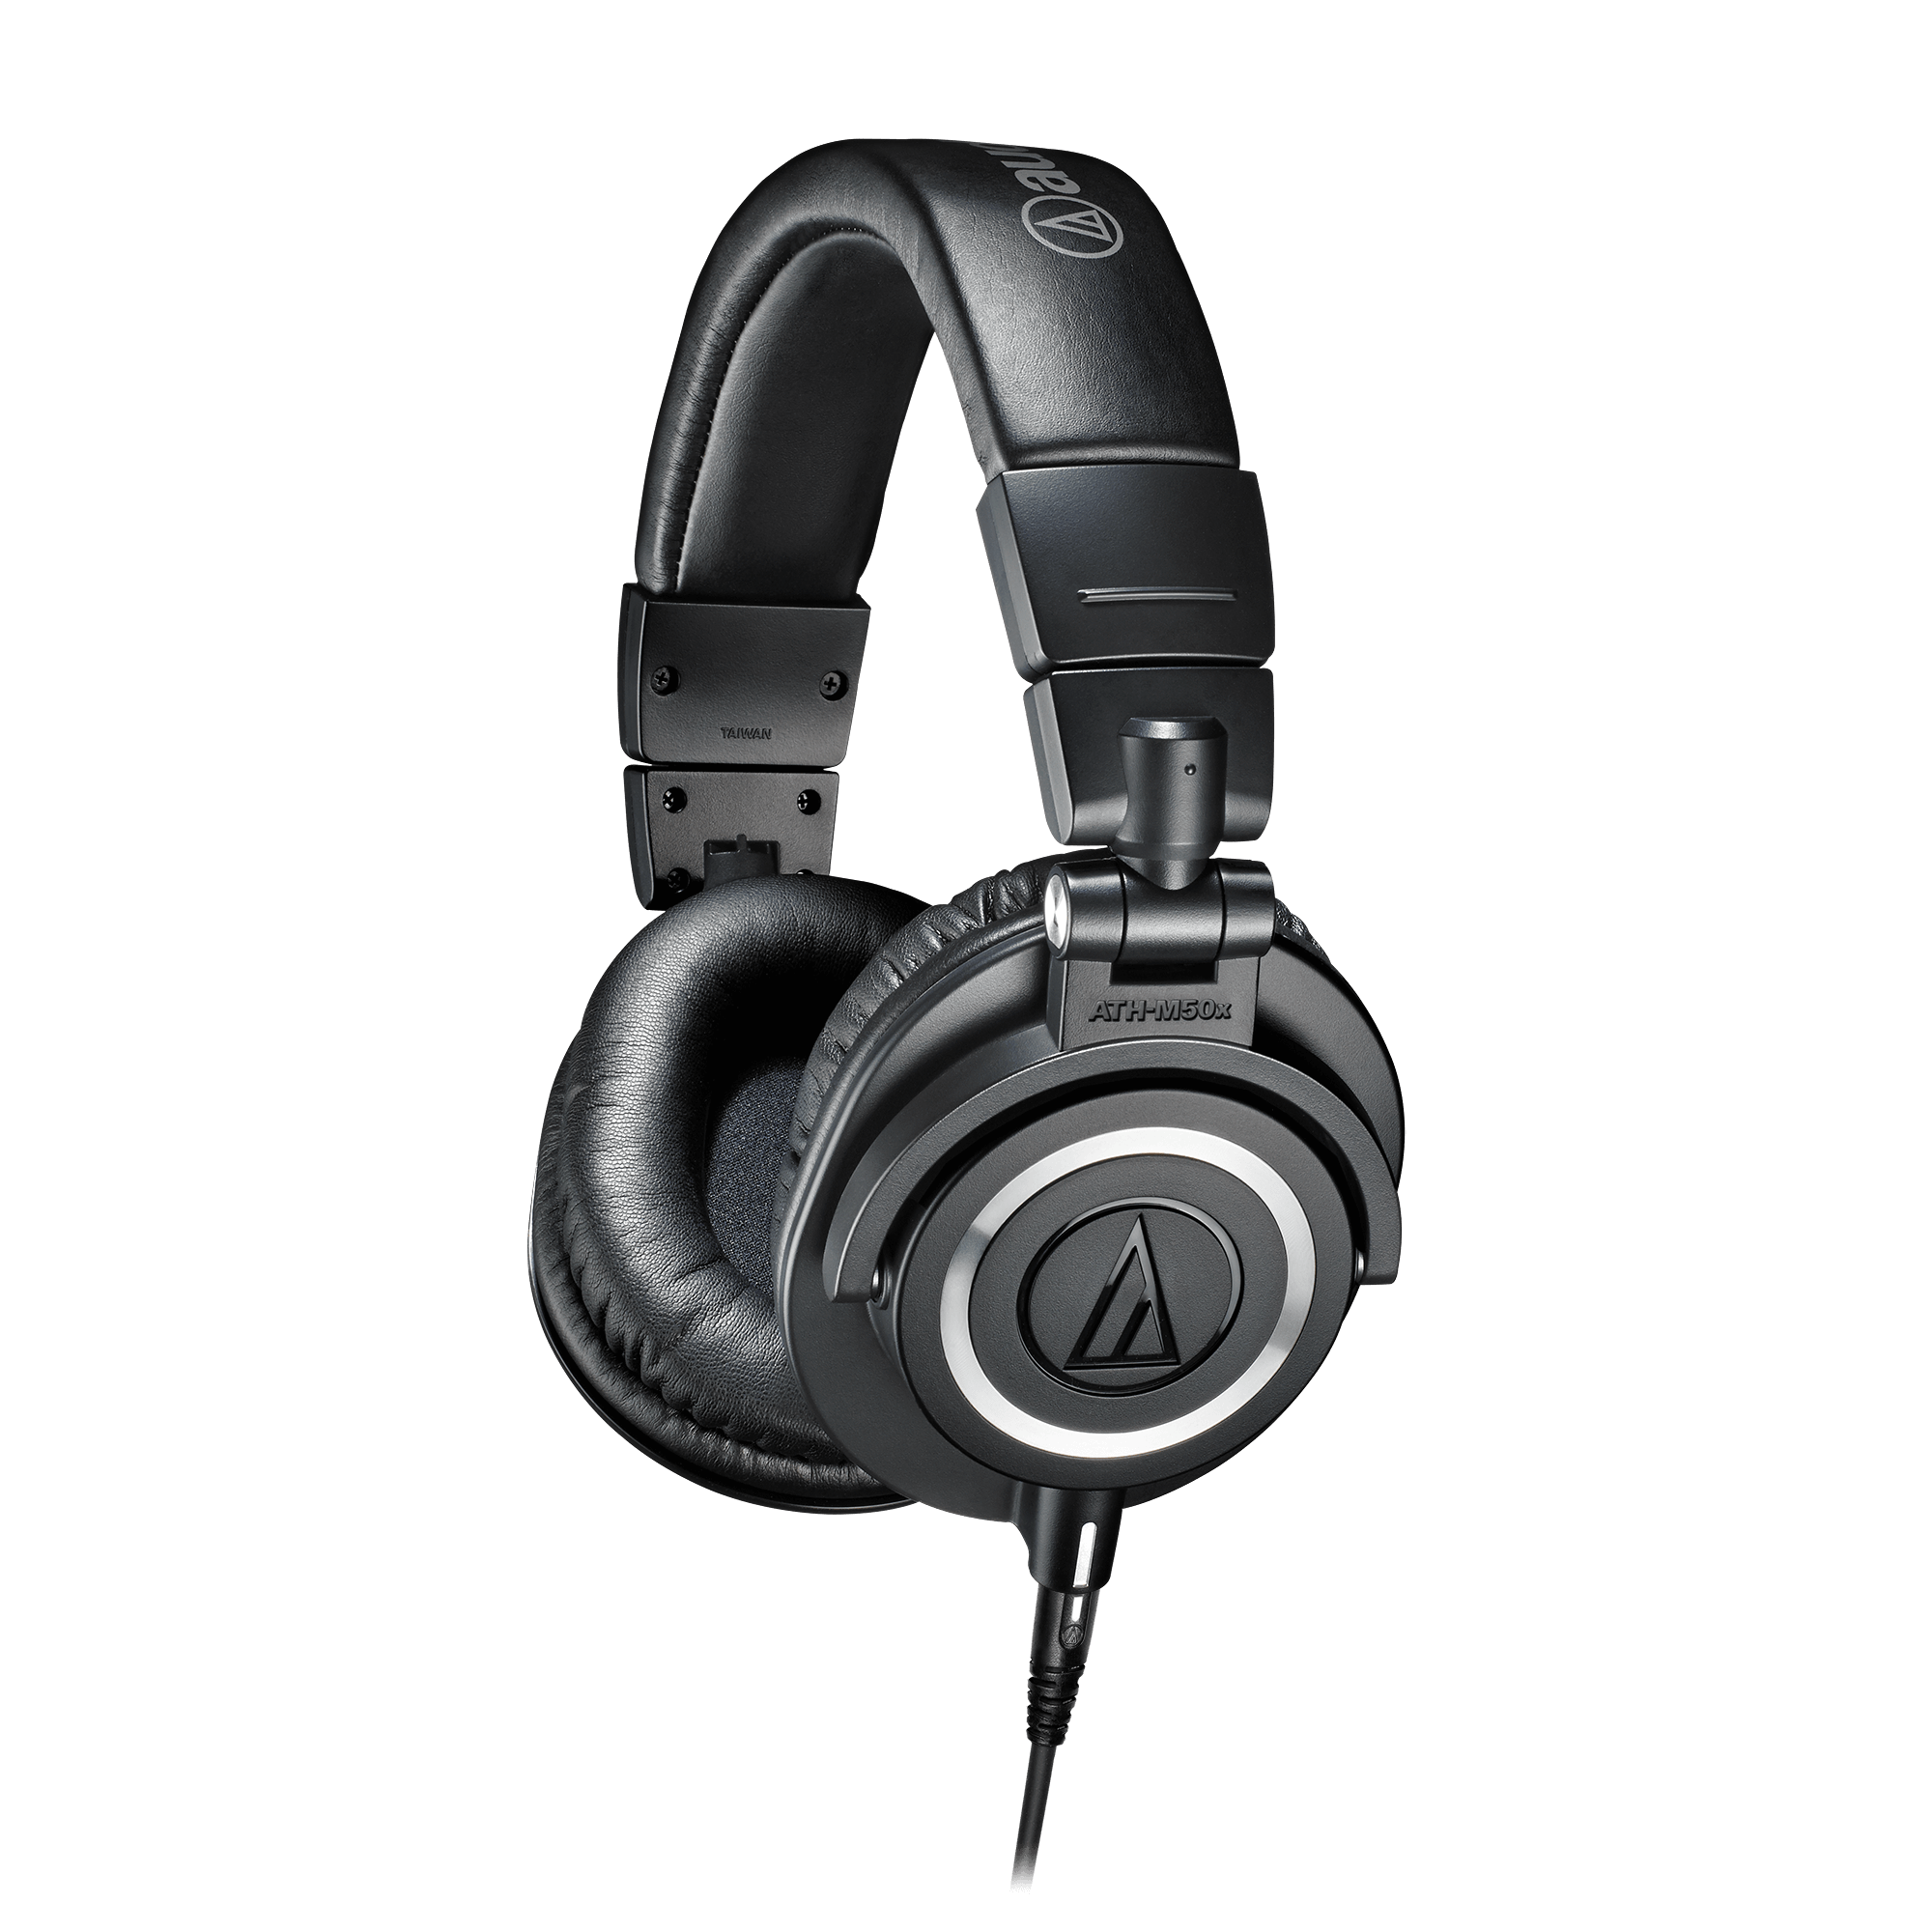 ATH-M50xProfessional monitor headphones